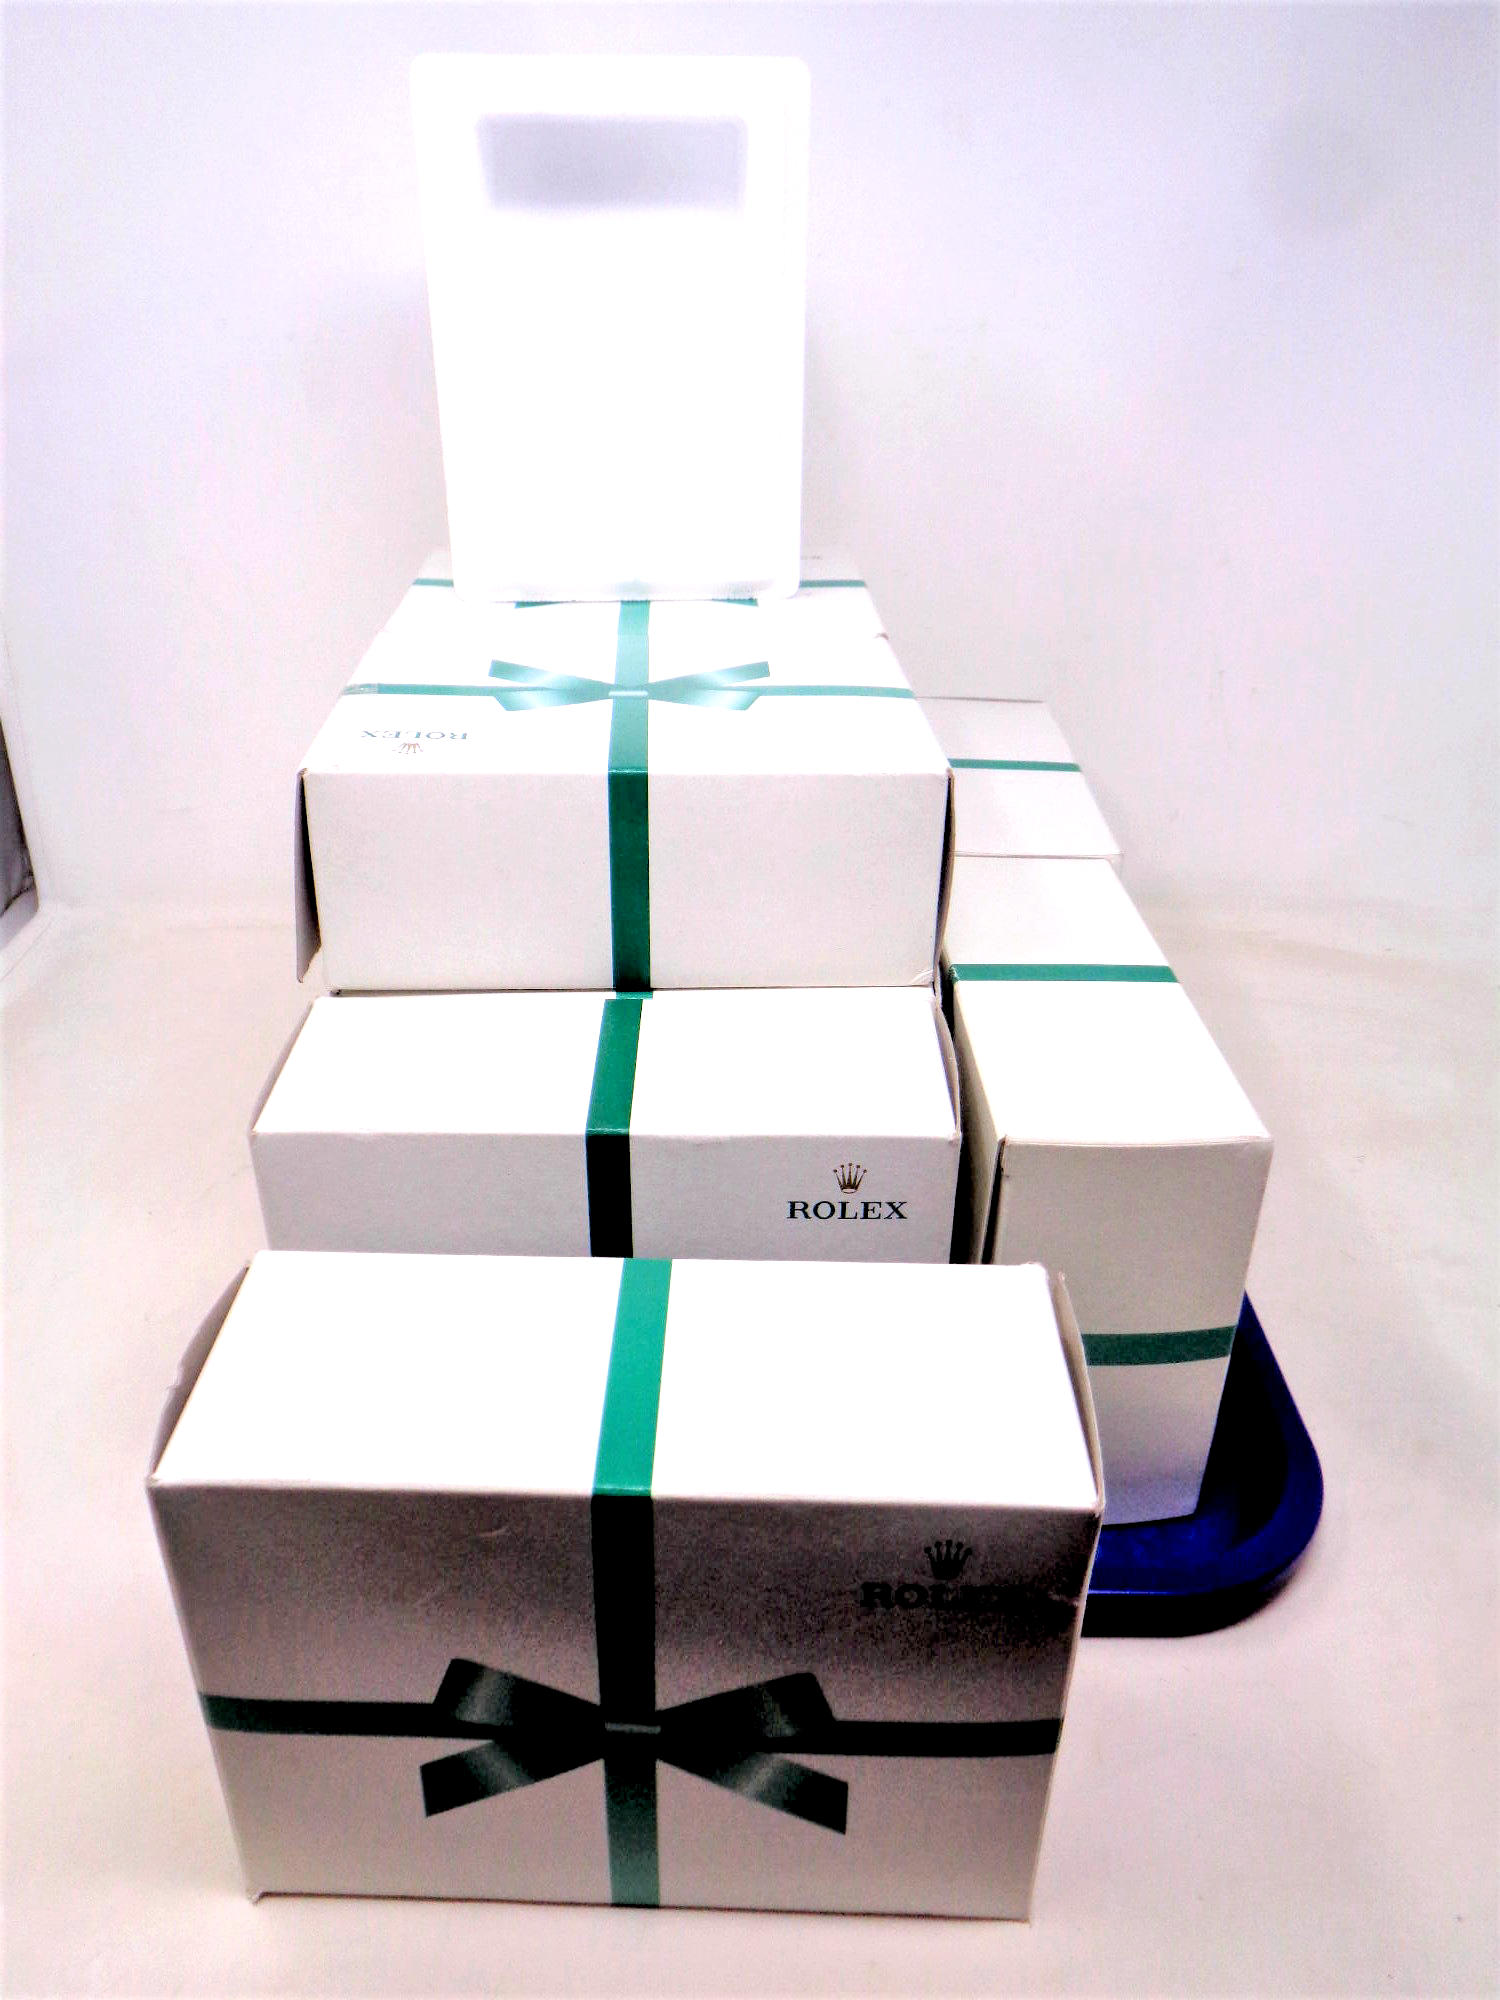 Ten Rolex display boxes with internal polystyrene box, both bearing Rolex branding.